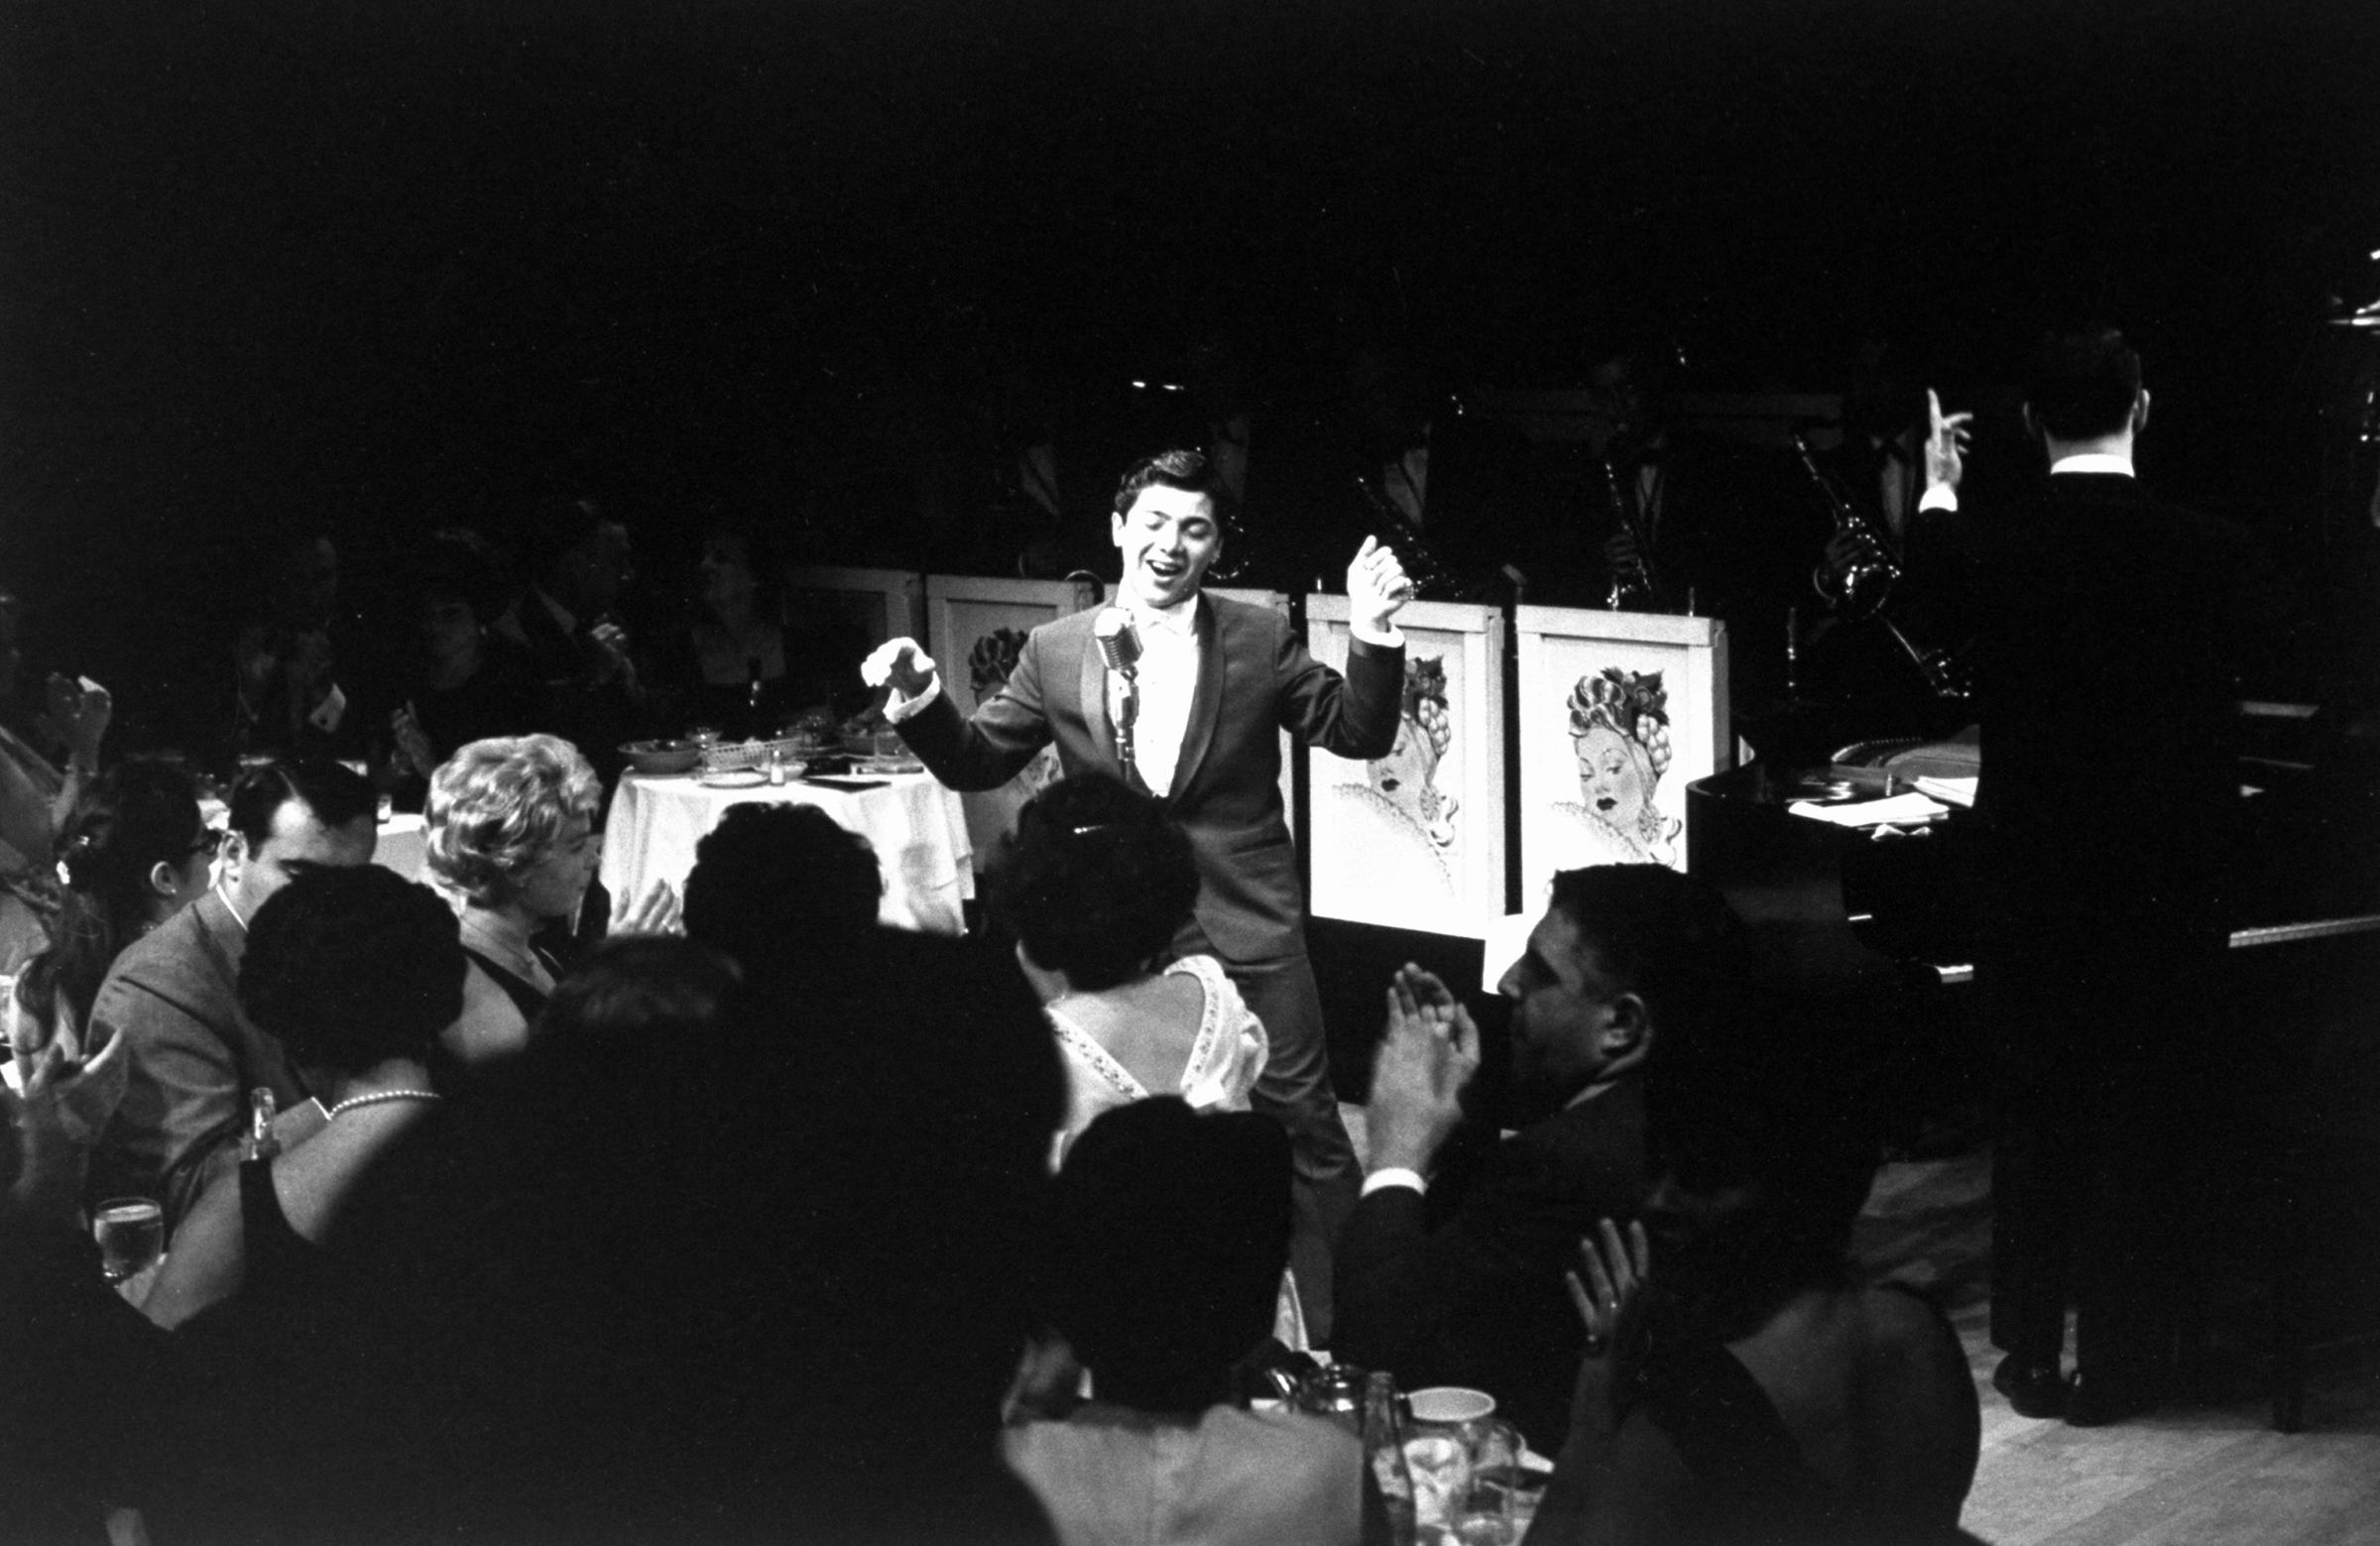 Paul Anka during his premiere performance at the Copacabana nightclub, 1960.